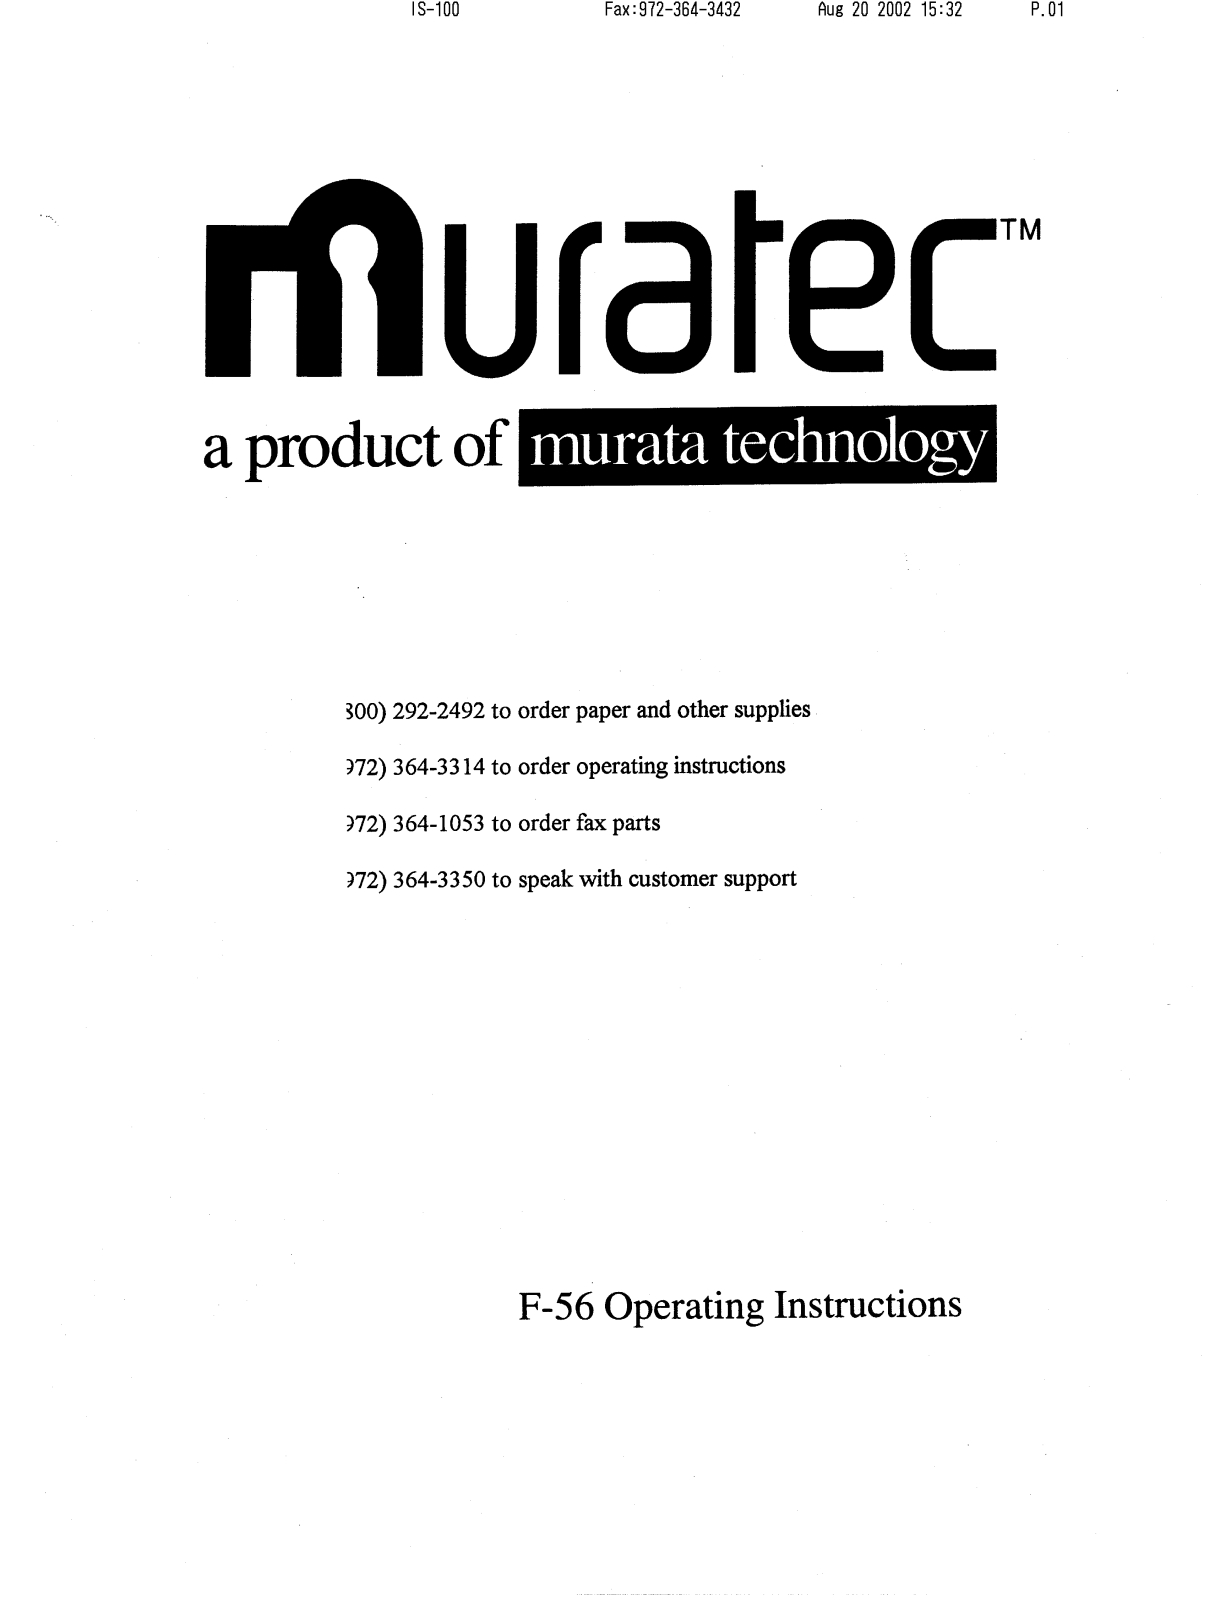 Muratec F-56 Operating Manual